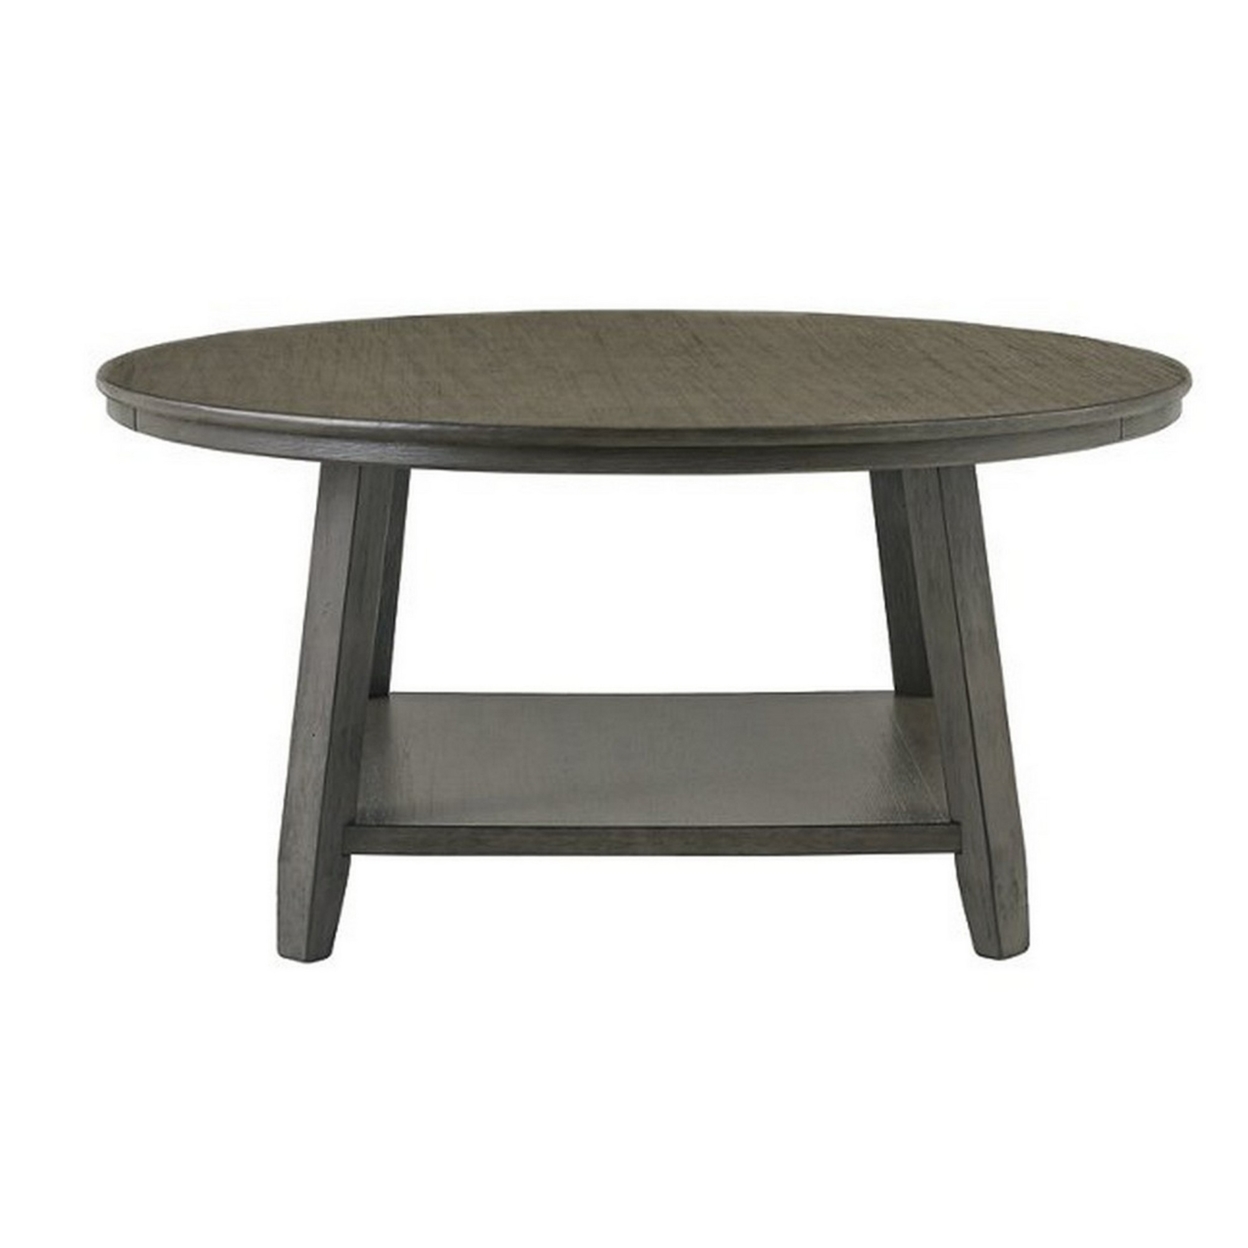 3 Piece Occasional Table Set With Open Bottom Shelf, Antique Gray- Saltoro Sherpi